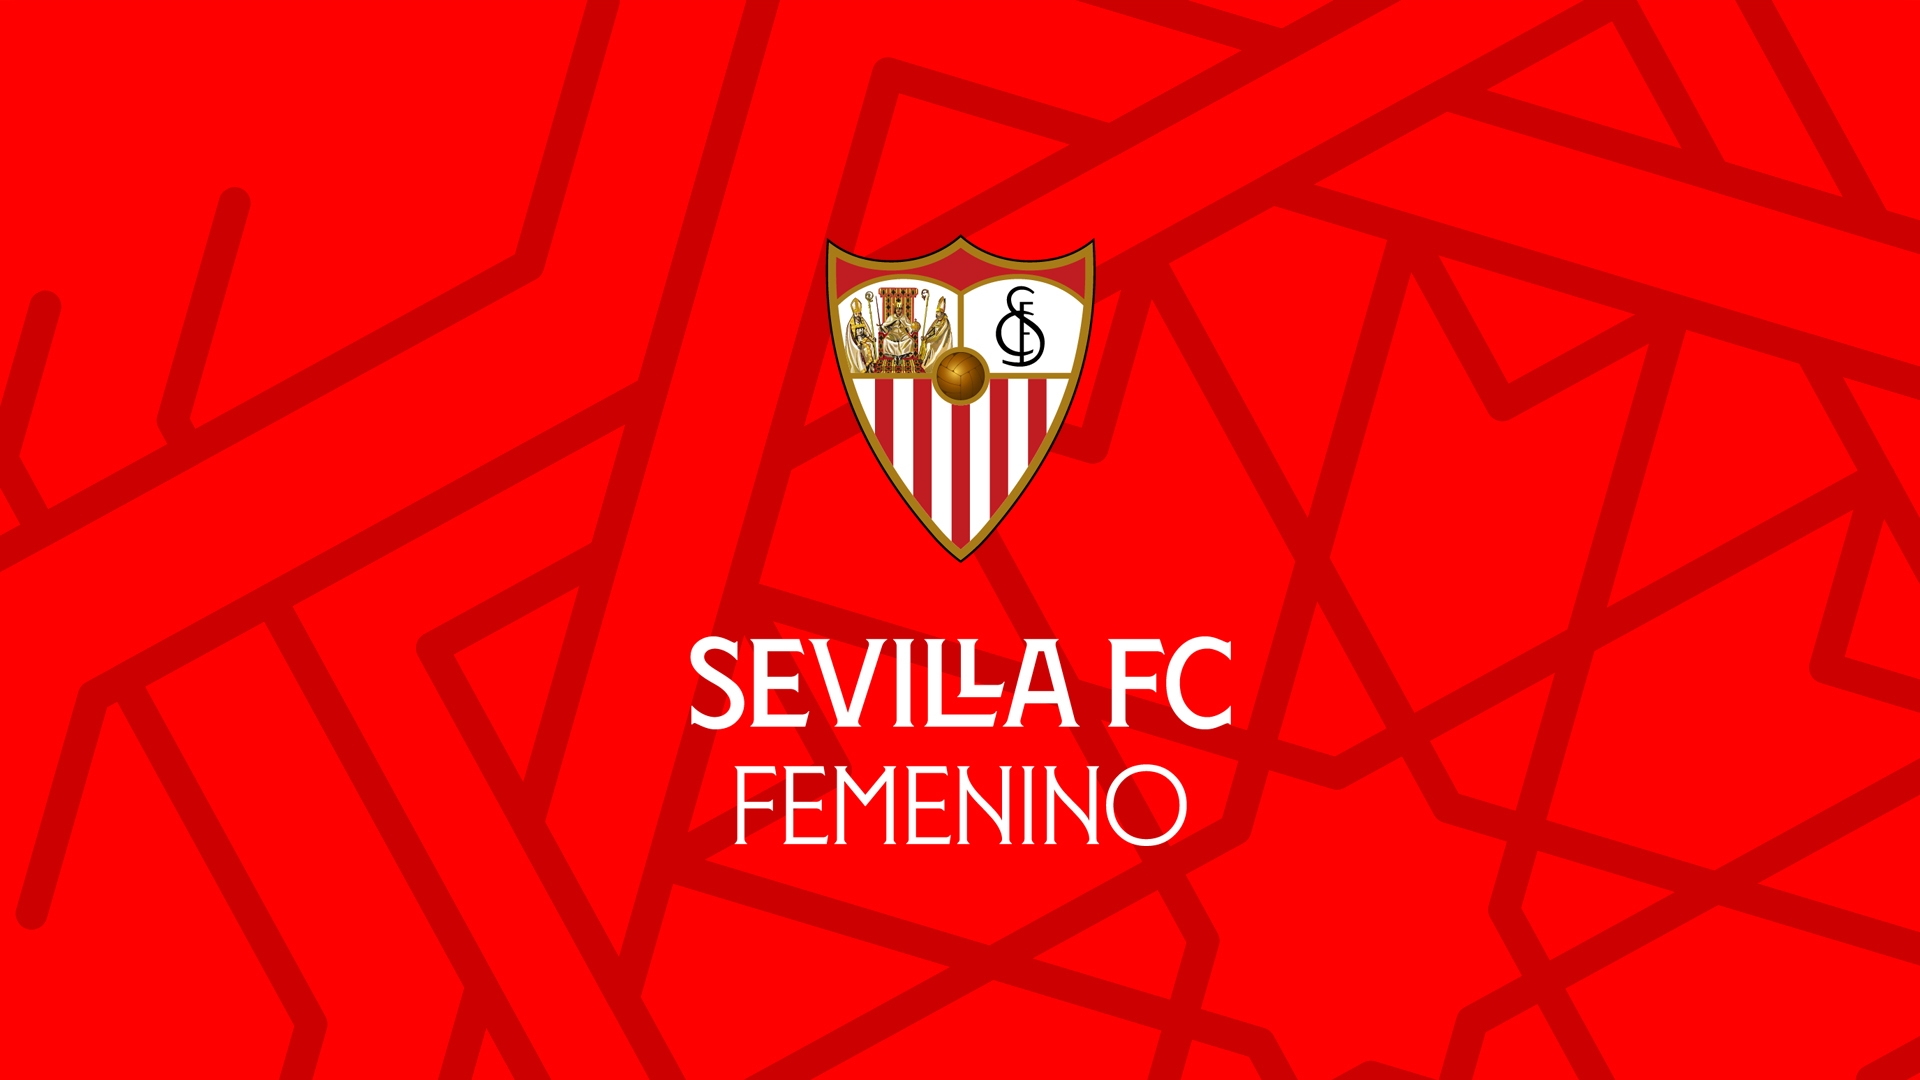 Comunicado Sevilla FC Femenino 